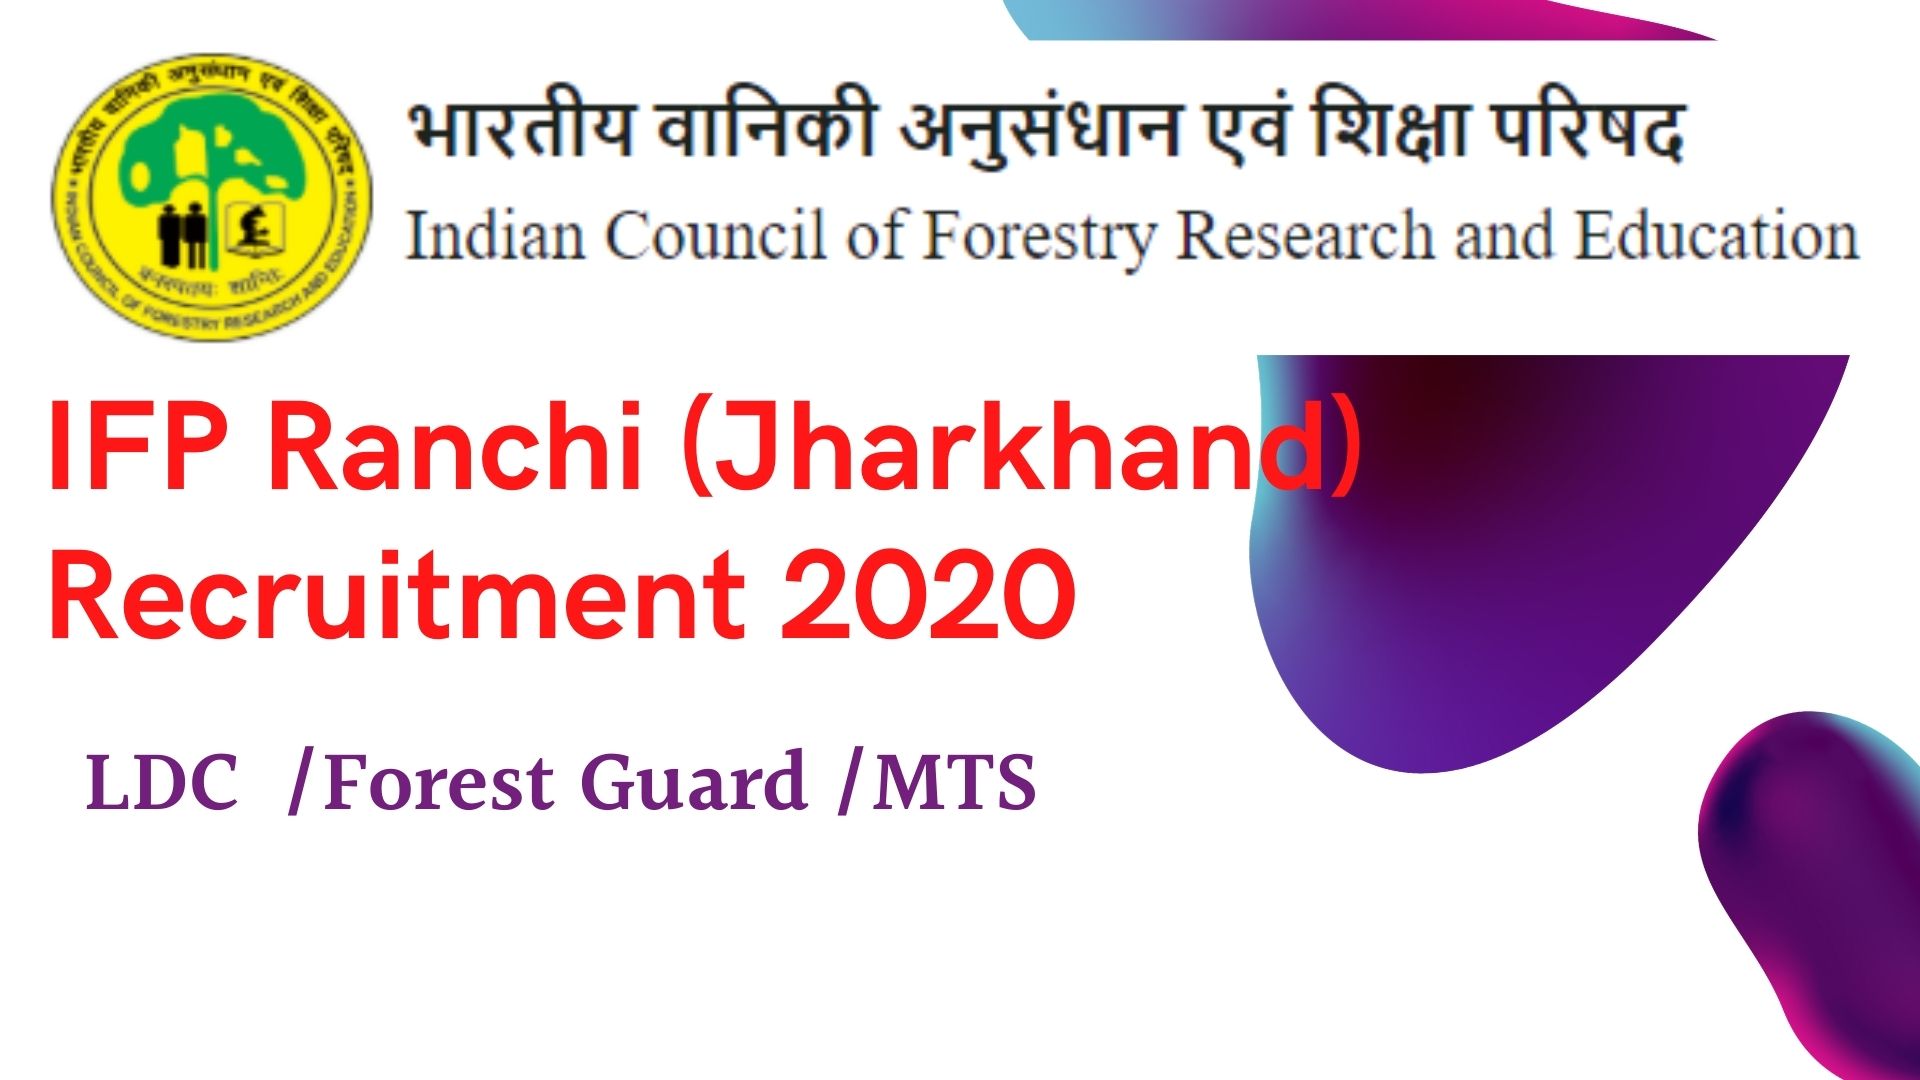 IFP Ranchi (Jharkhand) Recruitment 2020